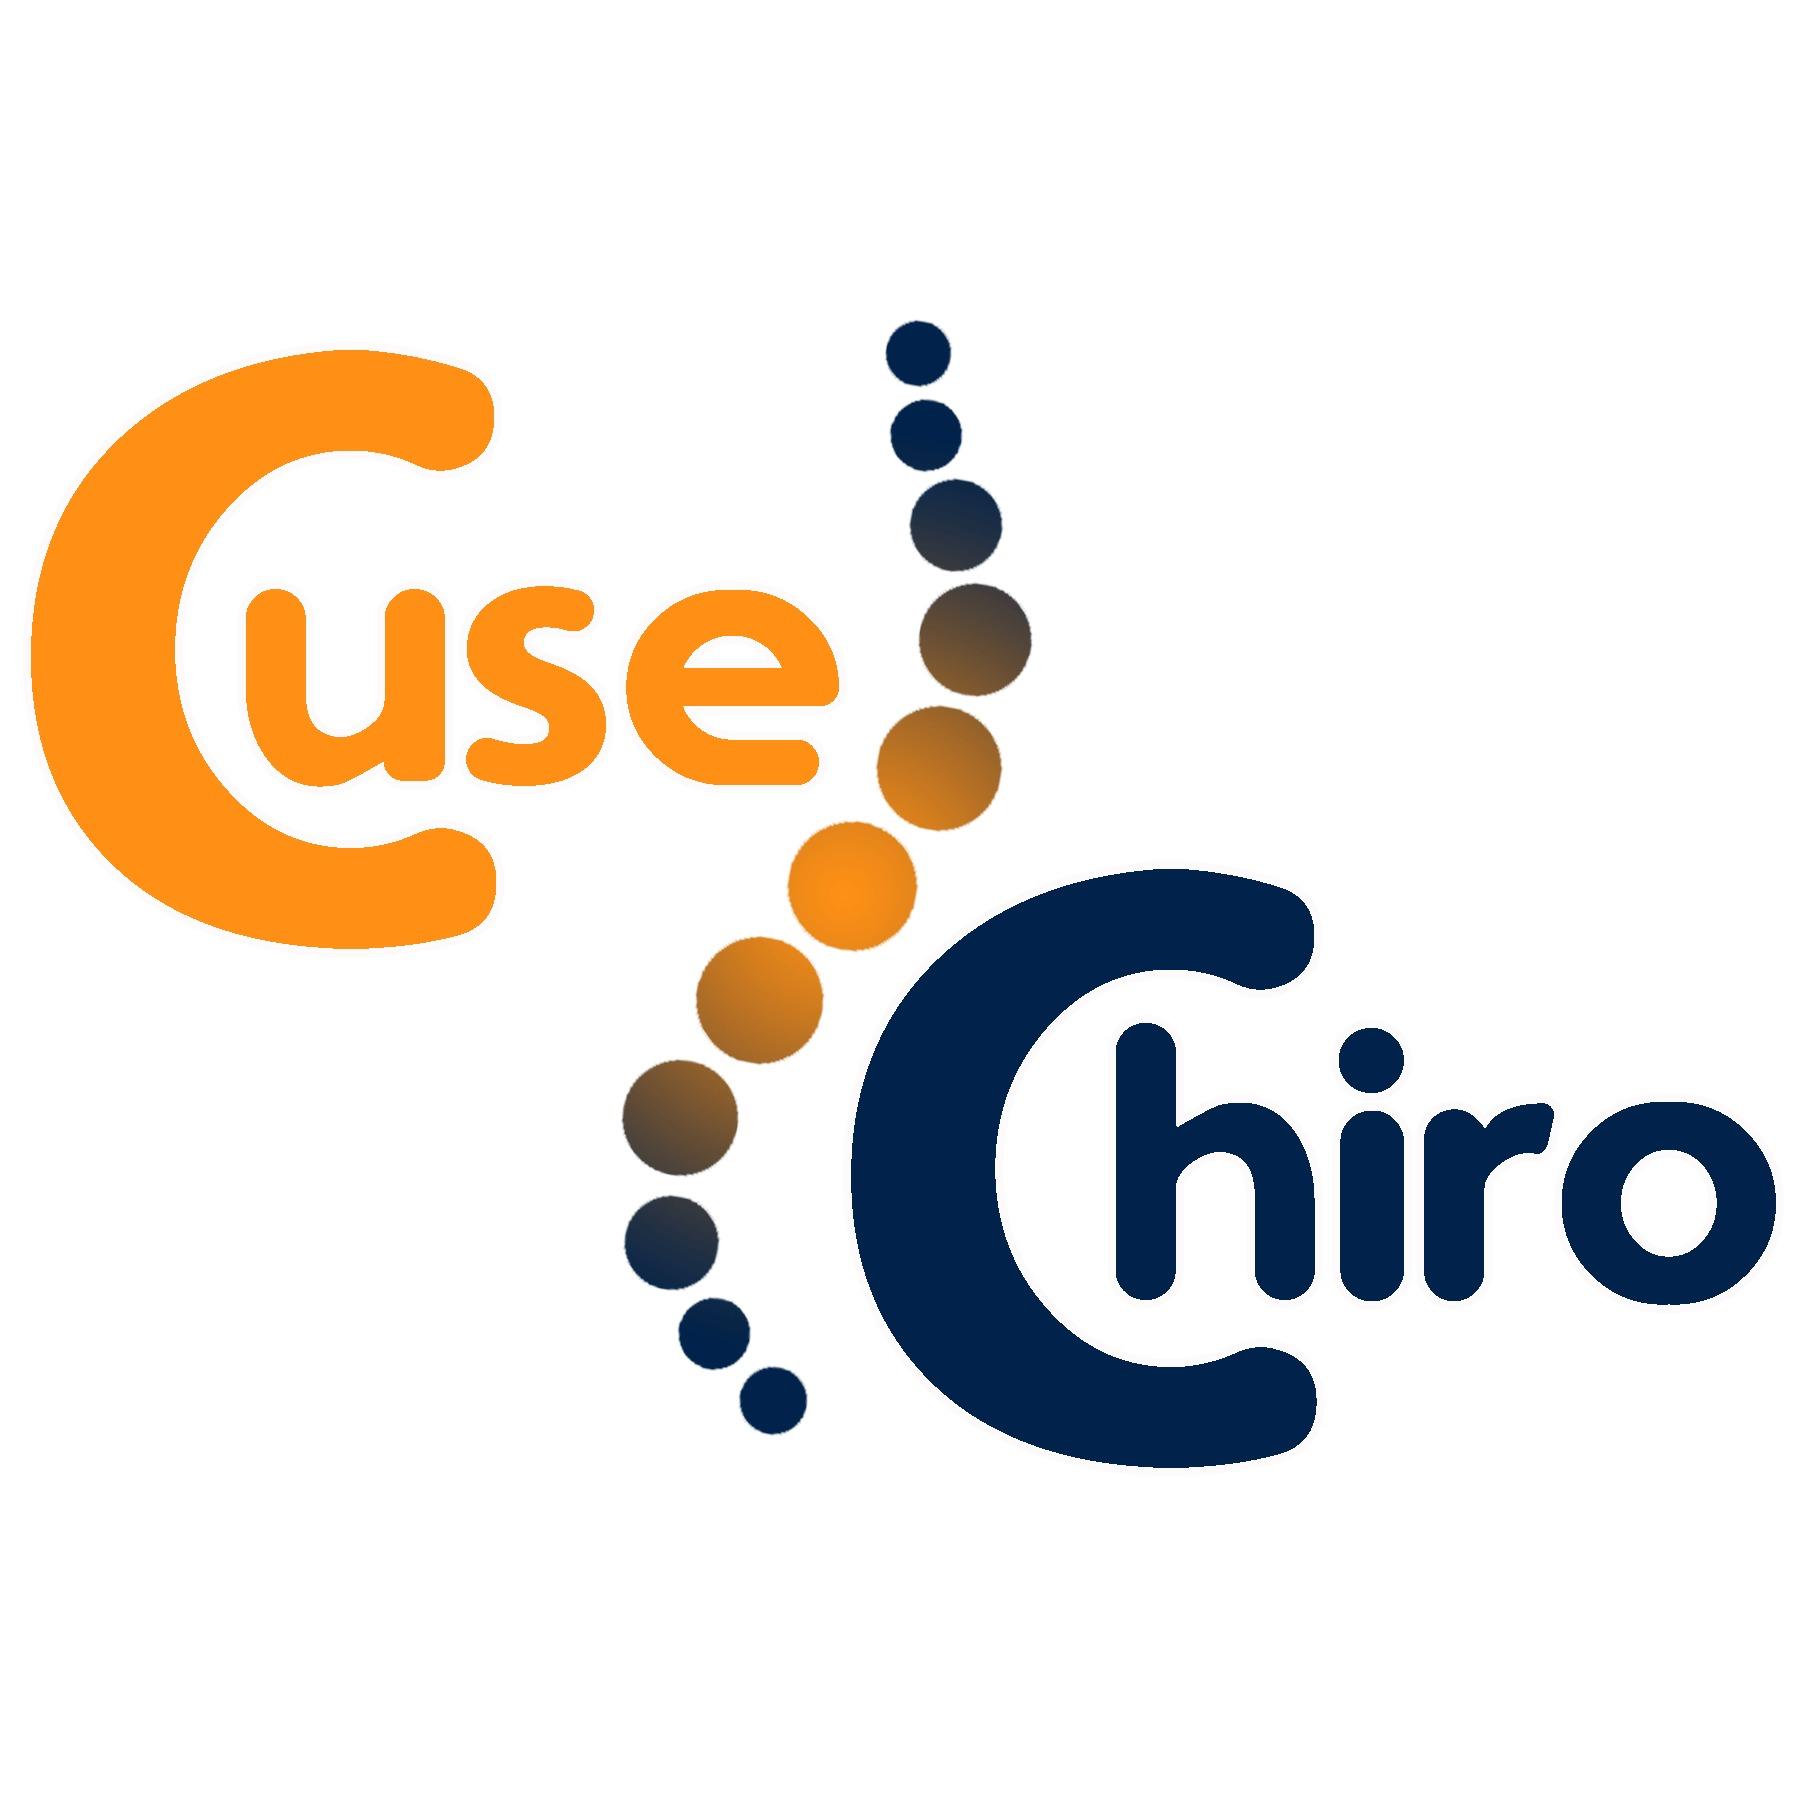 Cuse Chiro - Syracuse, NY 13202 - (315)217-1772 | ShowMeLocal.com